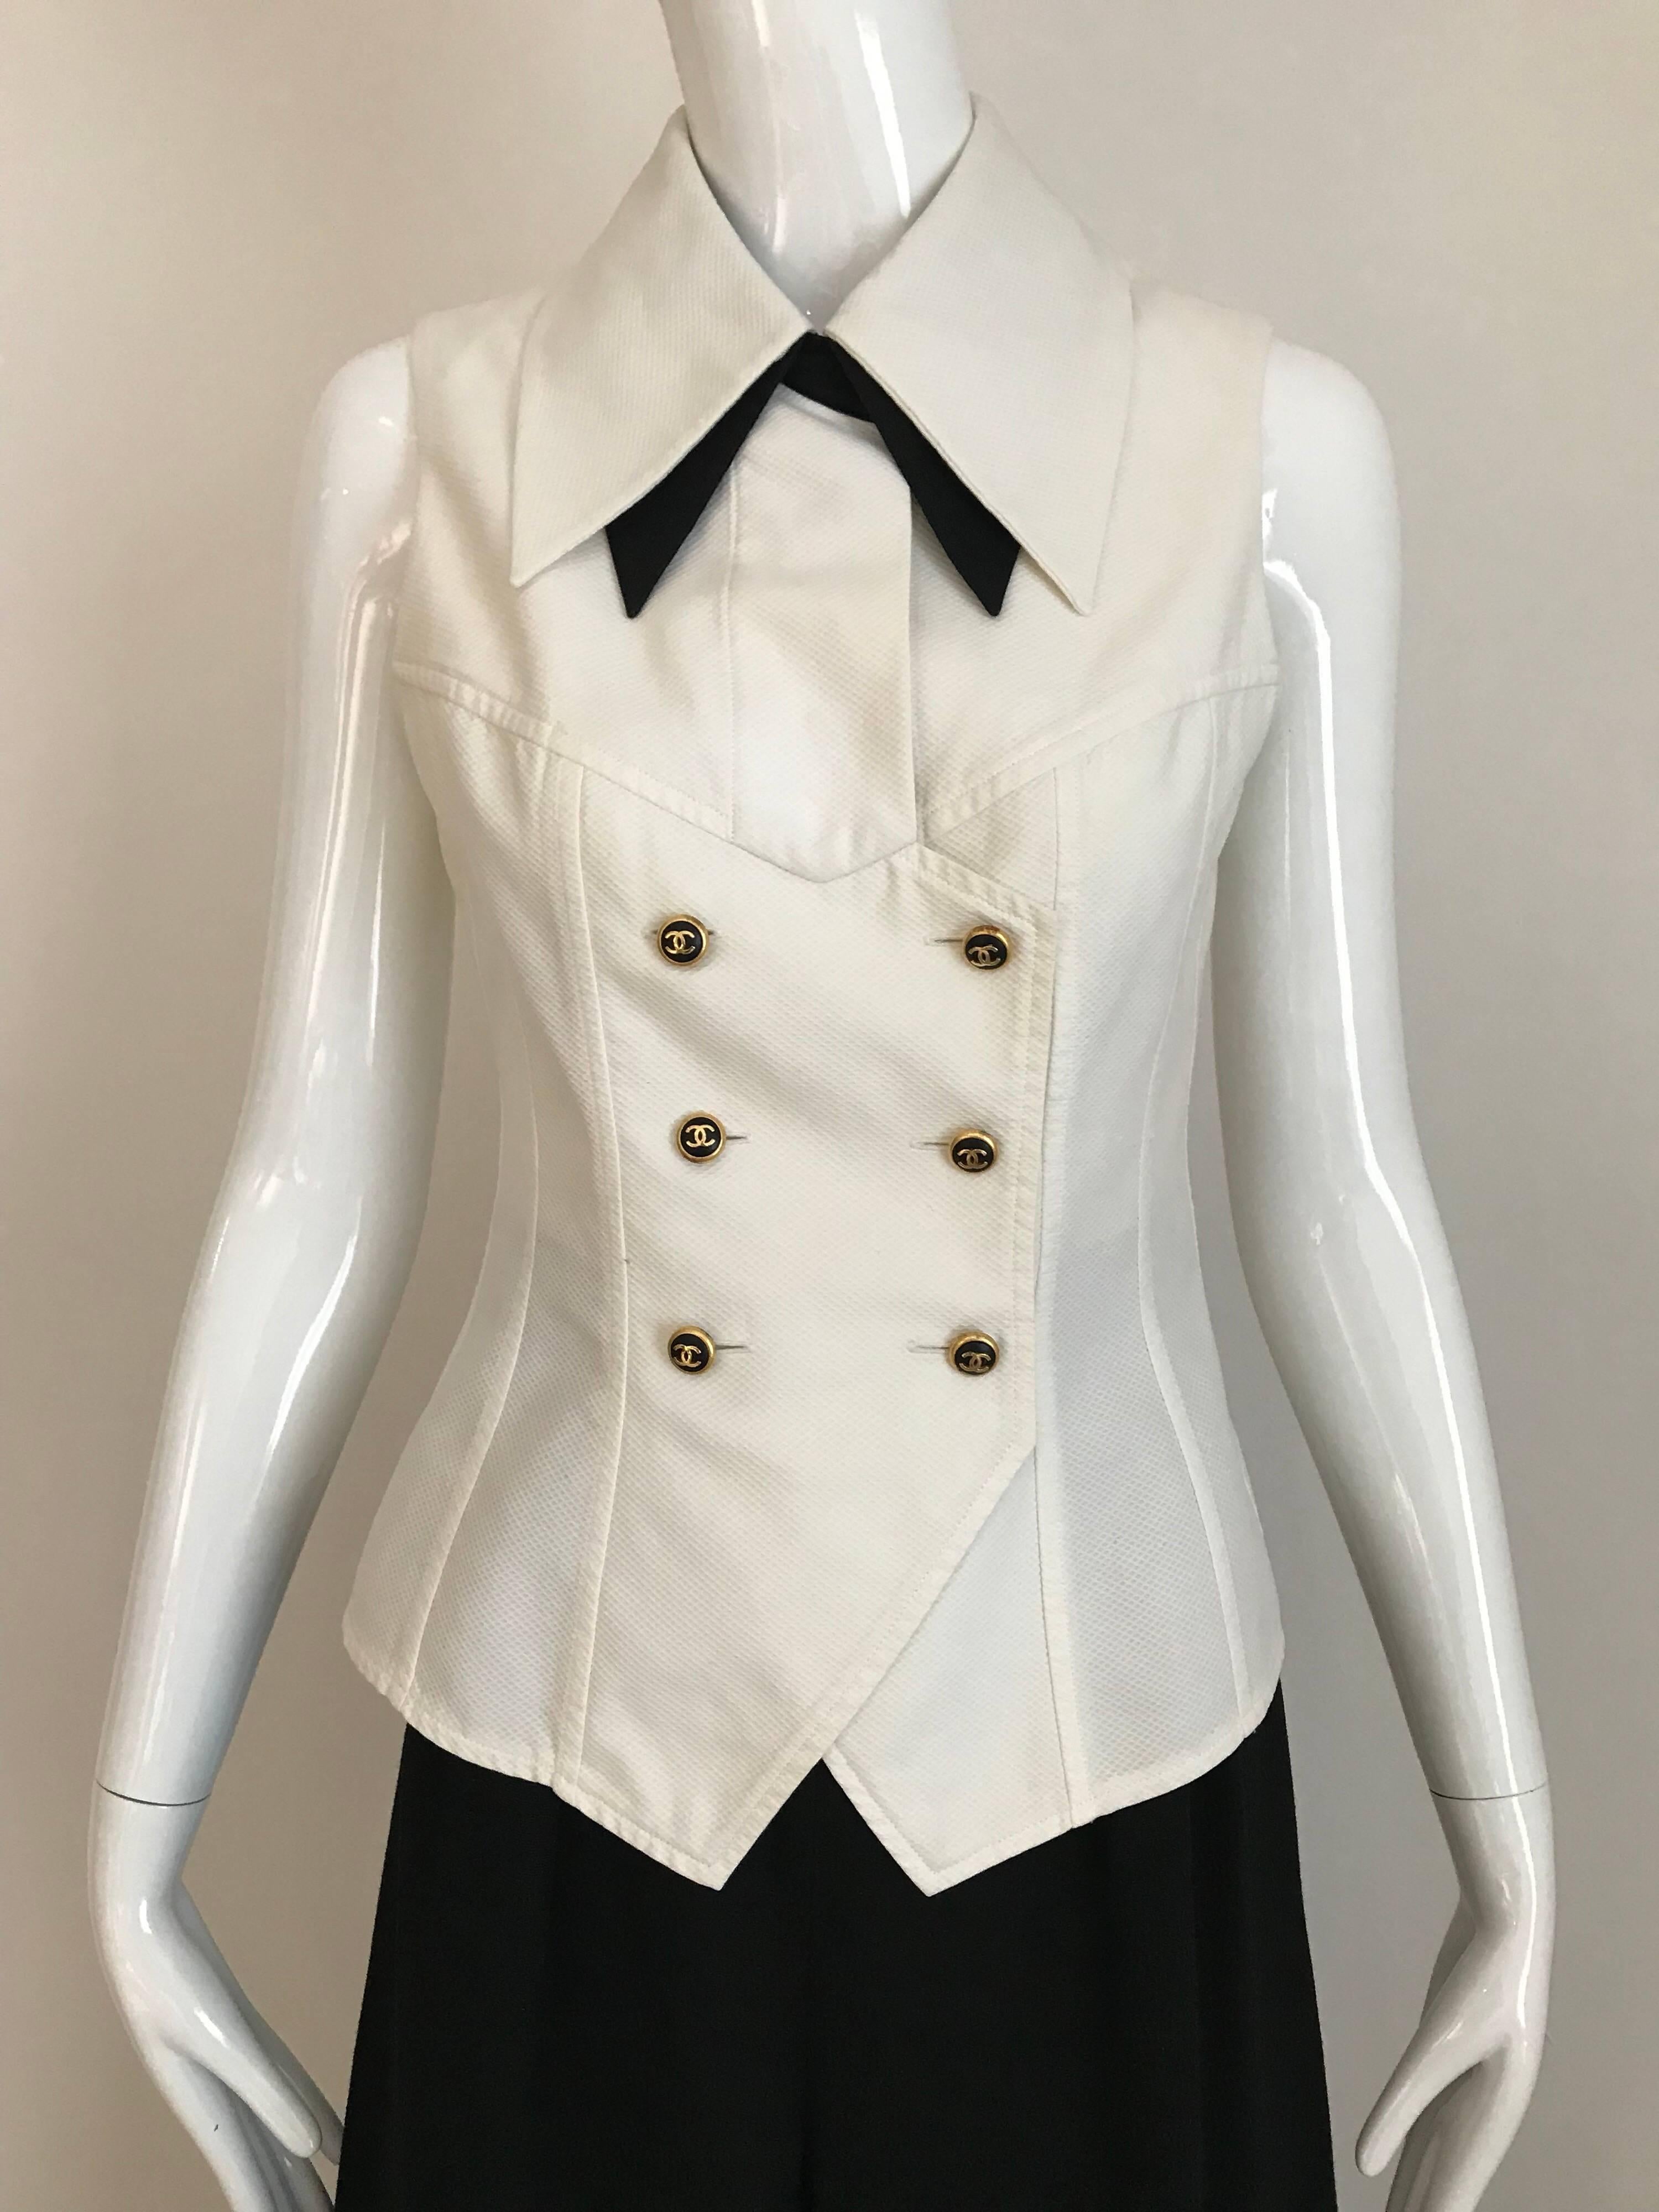 Chanel White Sleeveless Cotton Top and Black tuxedo pant suit set, 1980s  6